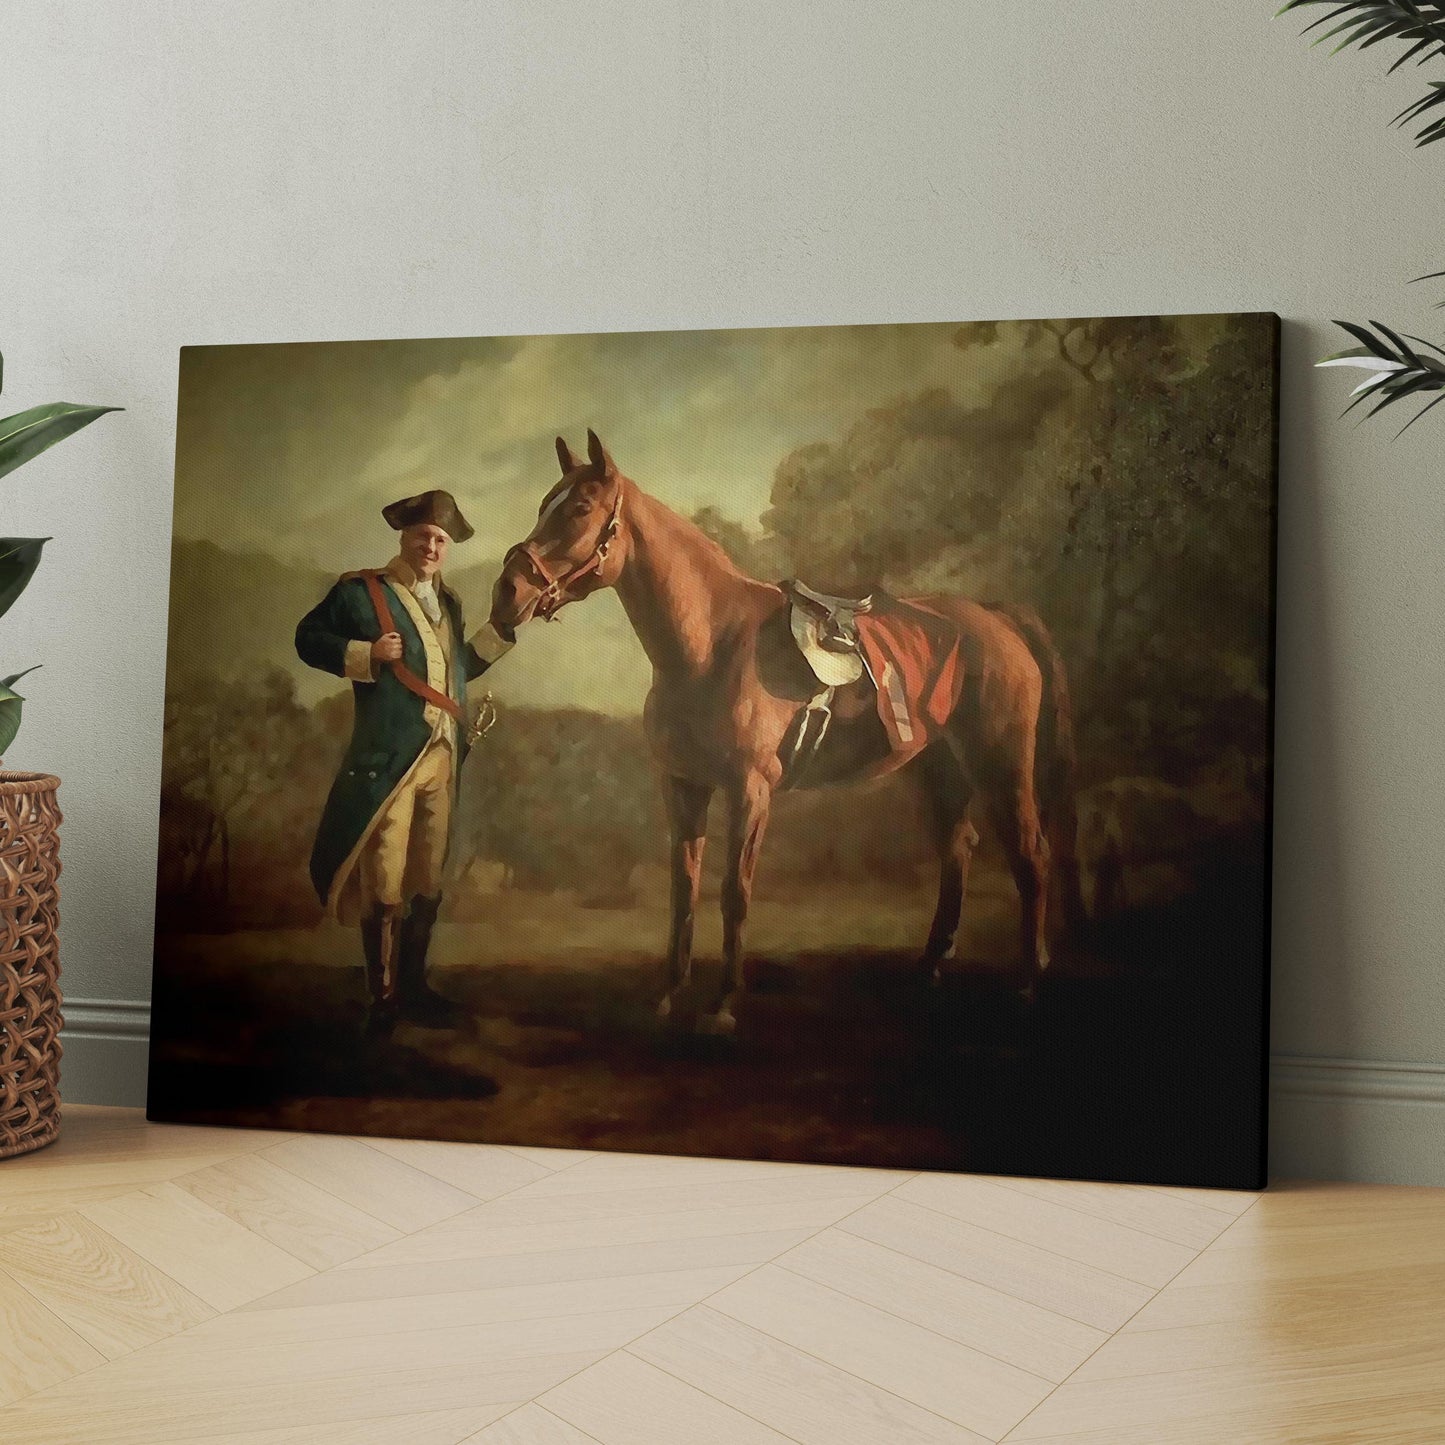 Pie-O-My Painting | The Sopranos: Tony with Pie-O-My Horse "Napoleon style"